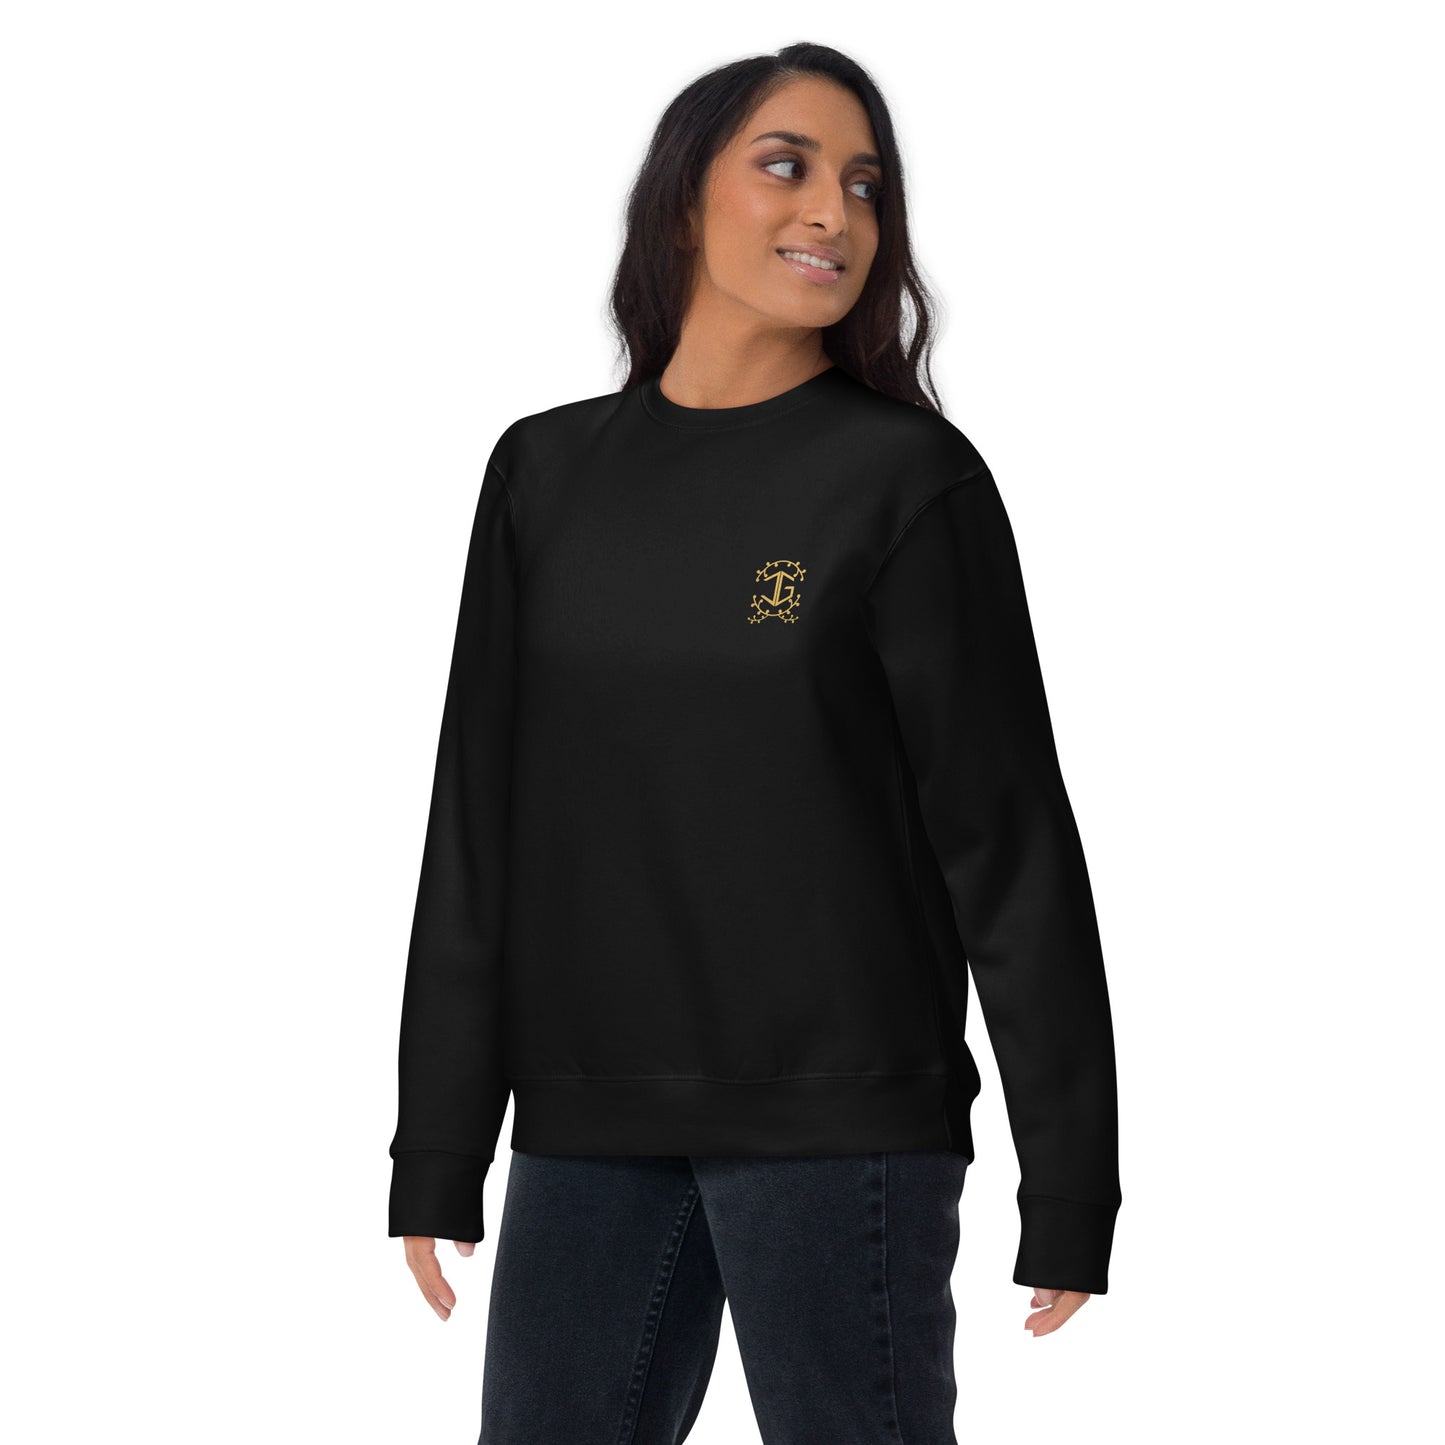 Common Ground "CG" Embroidered Premium Sweater